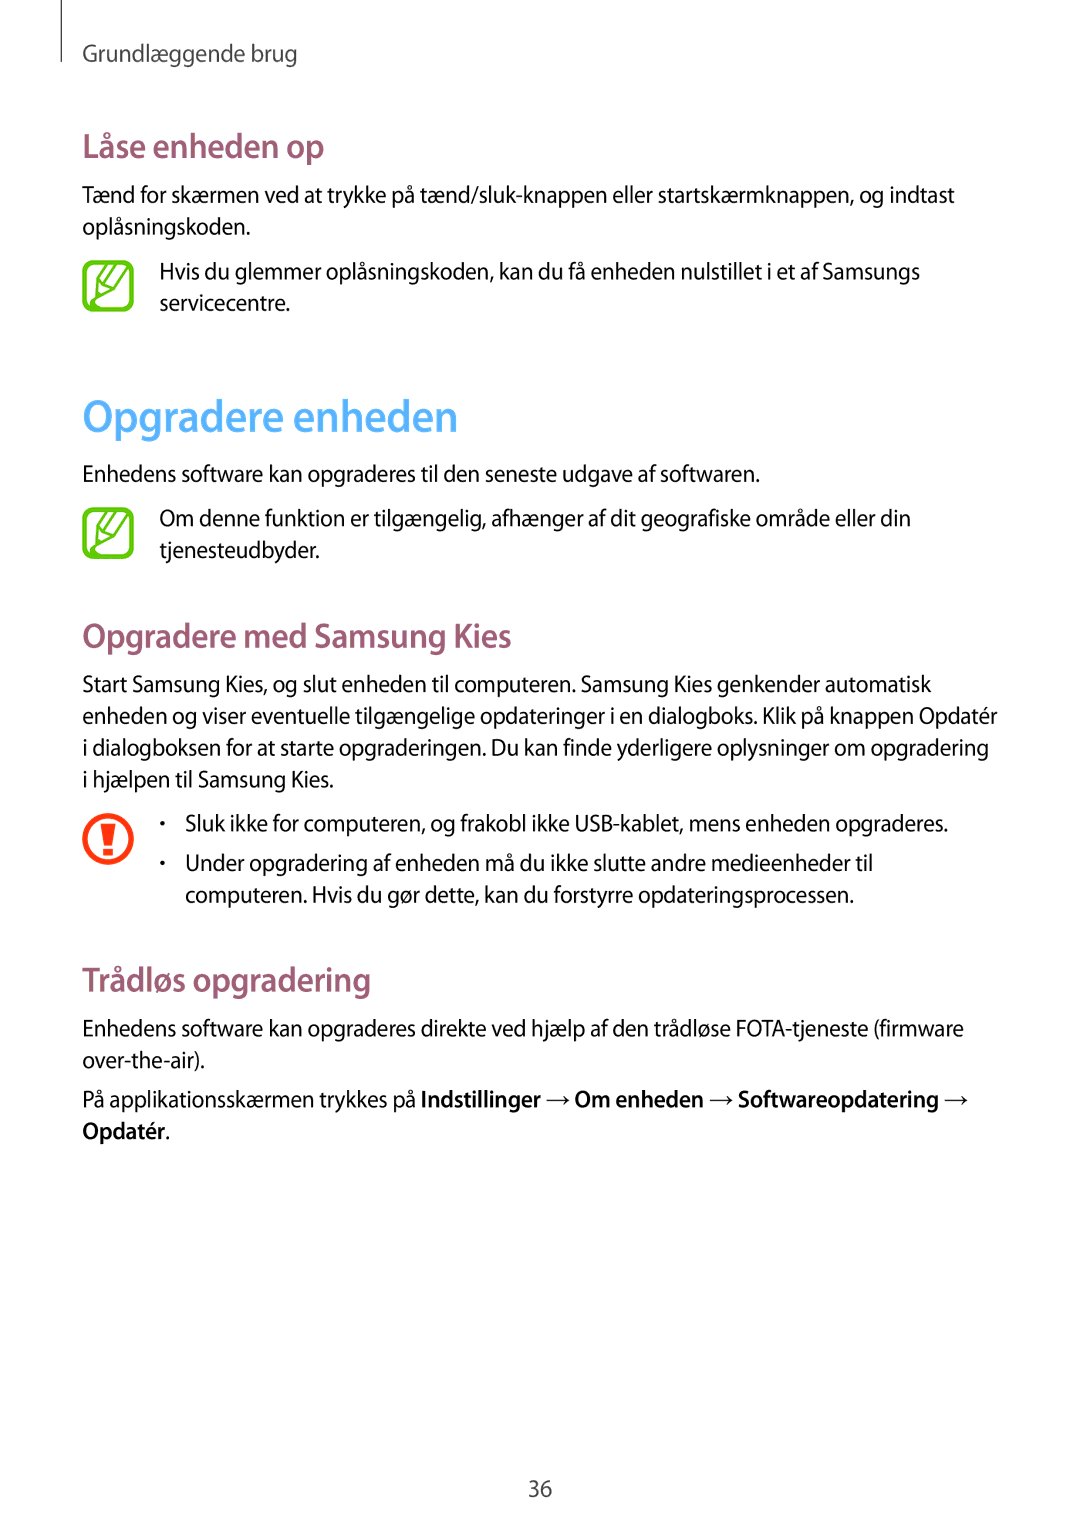 Samsung GT-S6310DBNNEE, GT-S6310WRNNEE Opgradere enheden, Låse enheden op, Opgradere med Samsung Kies, Trådløs opgradering 